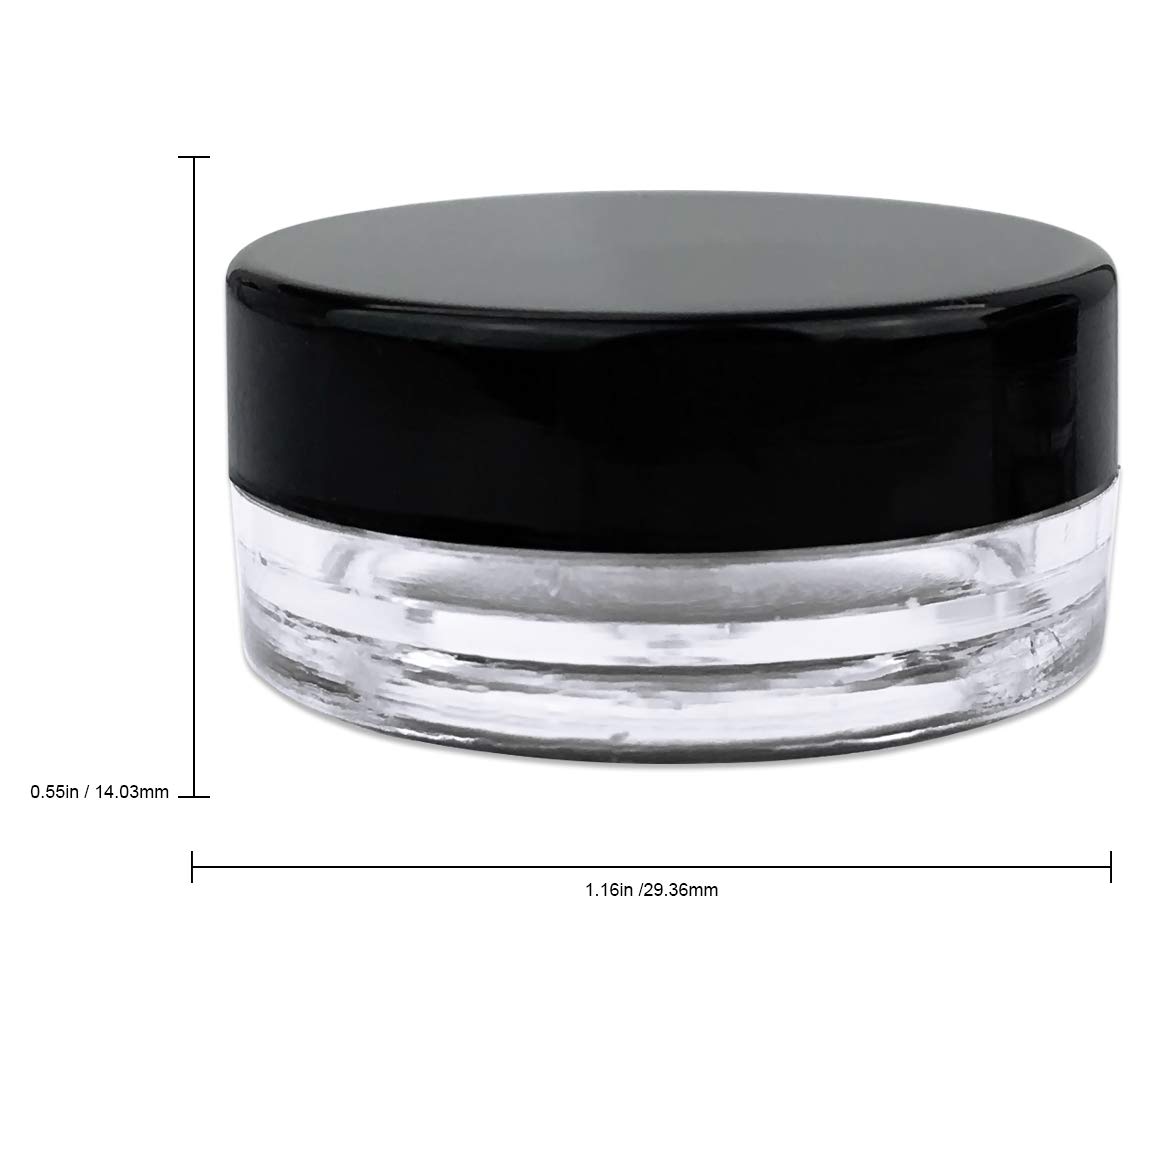 (100 Pieces Jars + Lid) Beauticom 3G/3ML Round Clear Jars with BLACK Screw Cap Lids for Scrubs, Oils, Toner, Salves, Creams, Lotions, Makeup Samples, Lip Balms - BPA Free